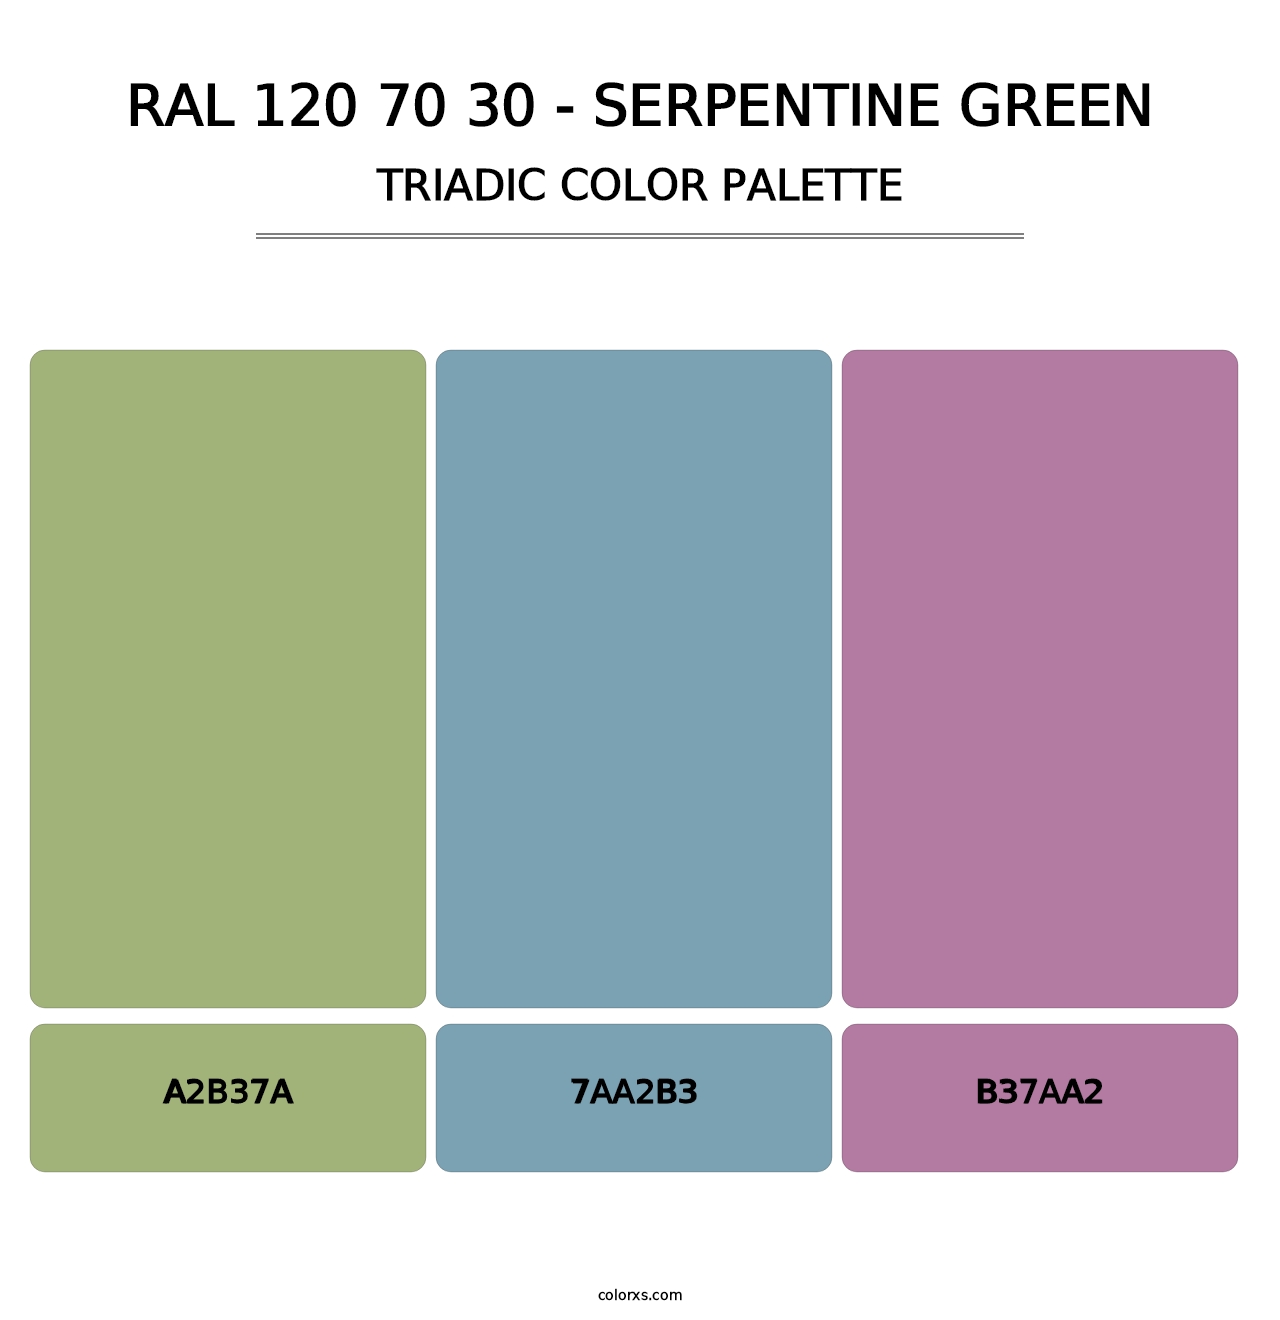 RAL 120 70 30 - Serpentine Green - Triadic Color Palette